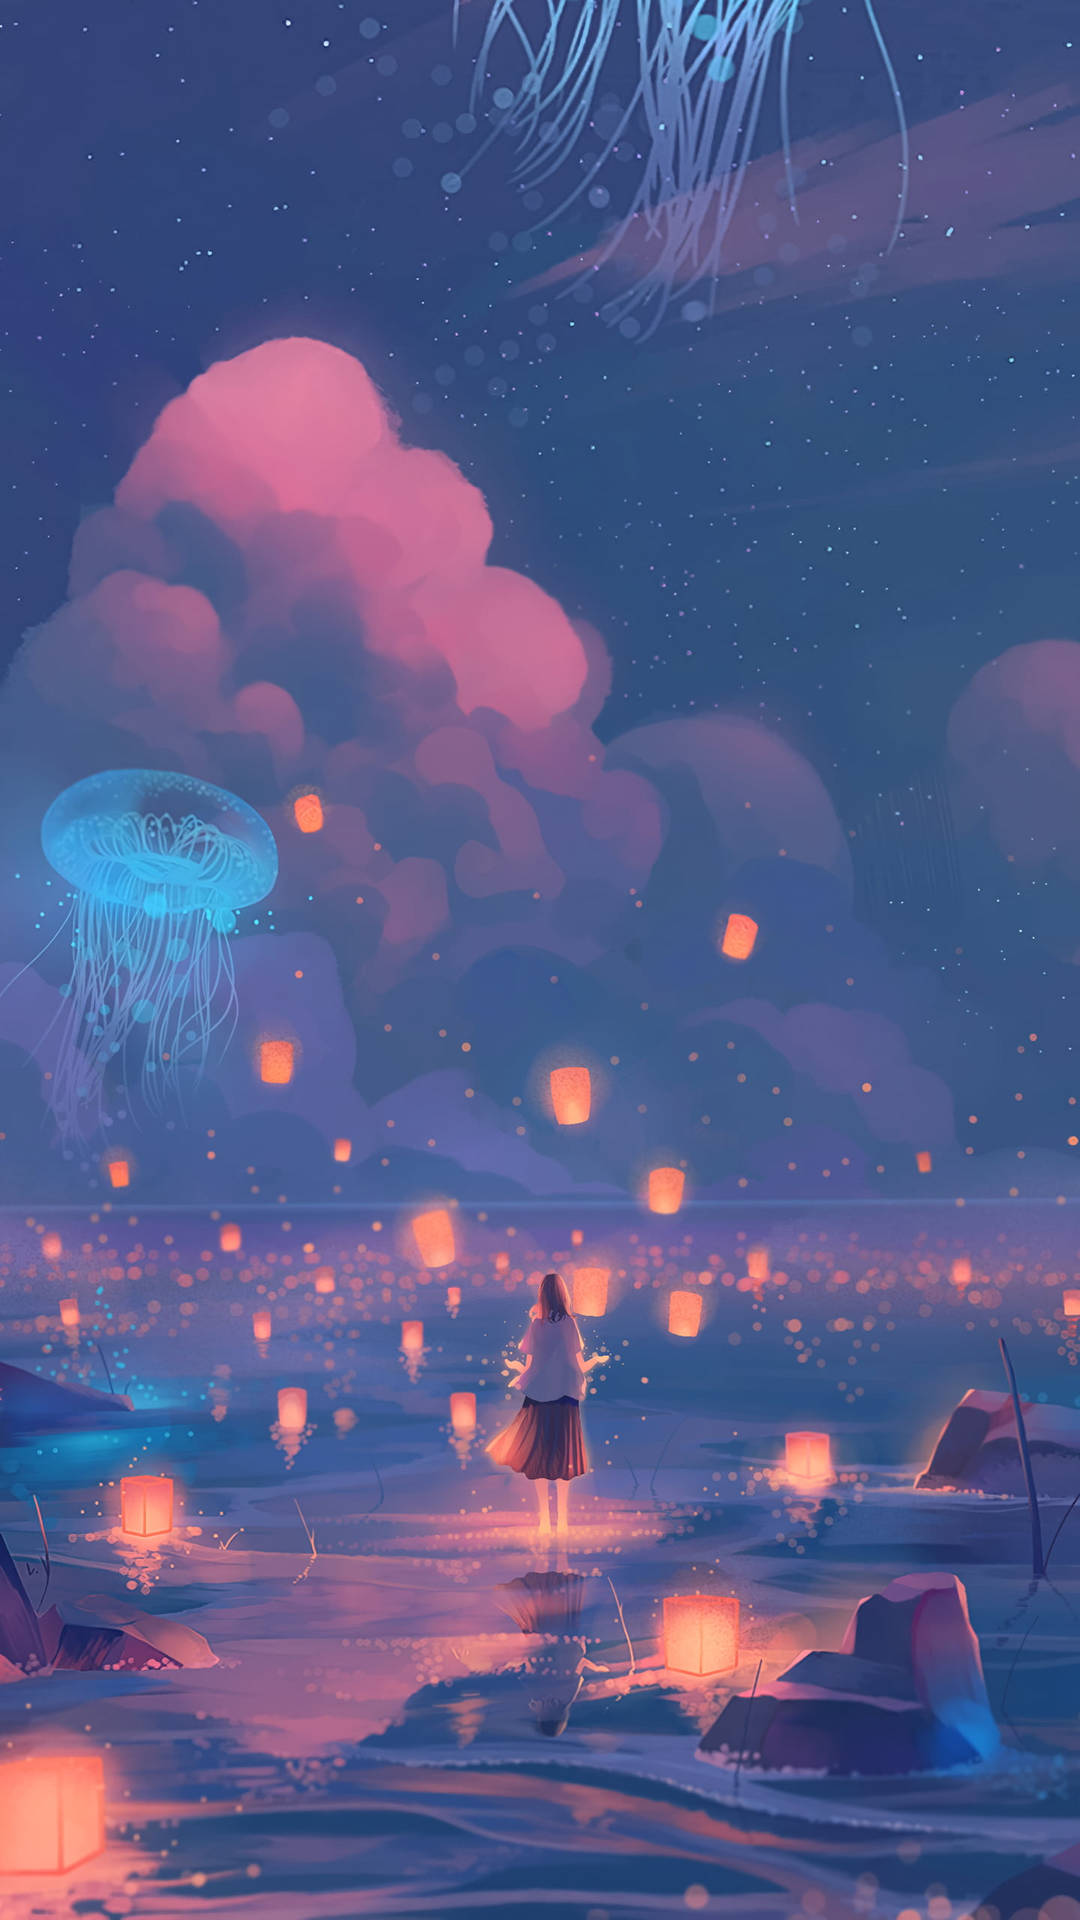 Mystical Marine Artwork - Glowing Lanterns as Jellyfish Wallpaper